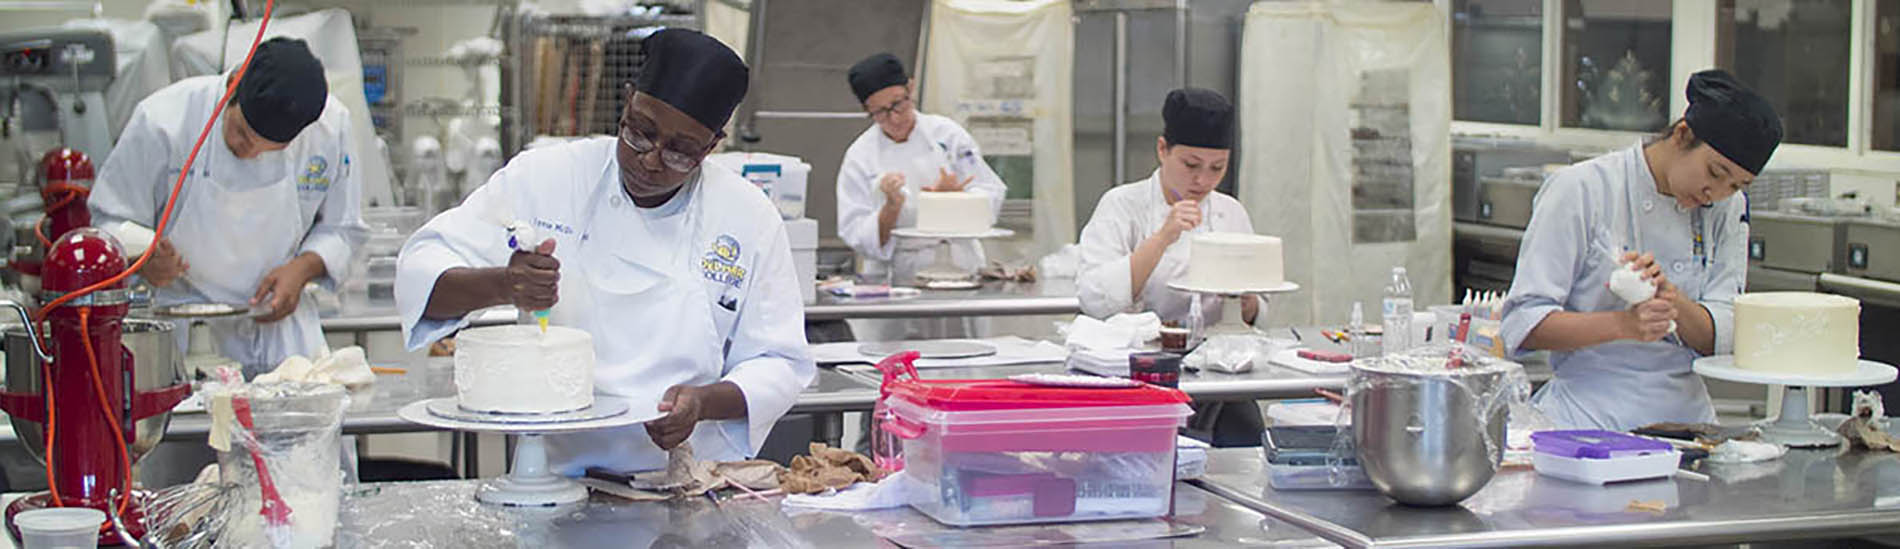 Culinary Arts students preparing cakes